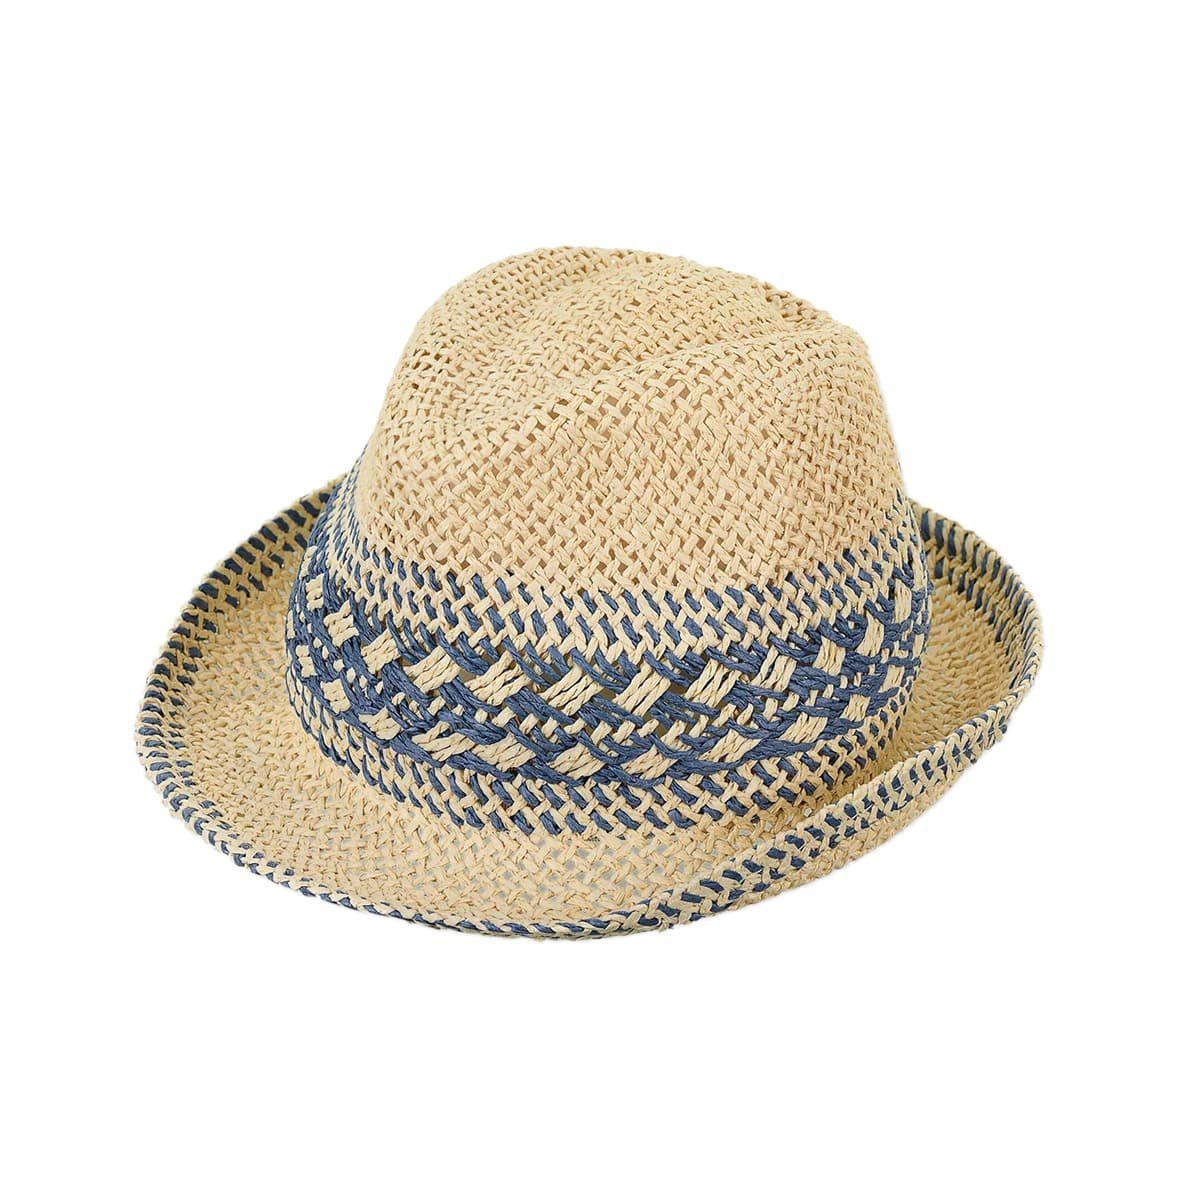 STERNTALER | Straw hat boys --> Online Hatshop for hats, caps ...